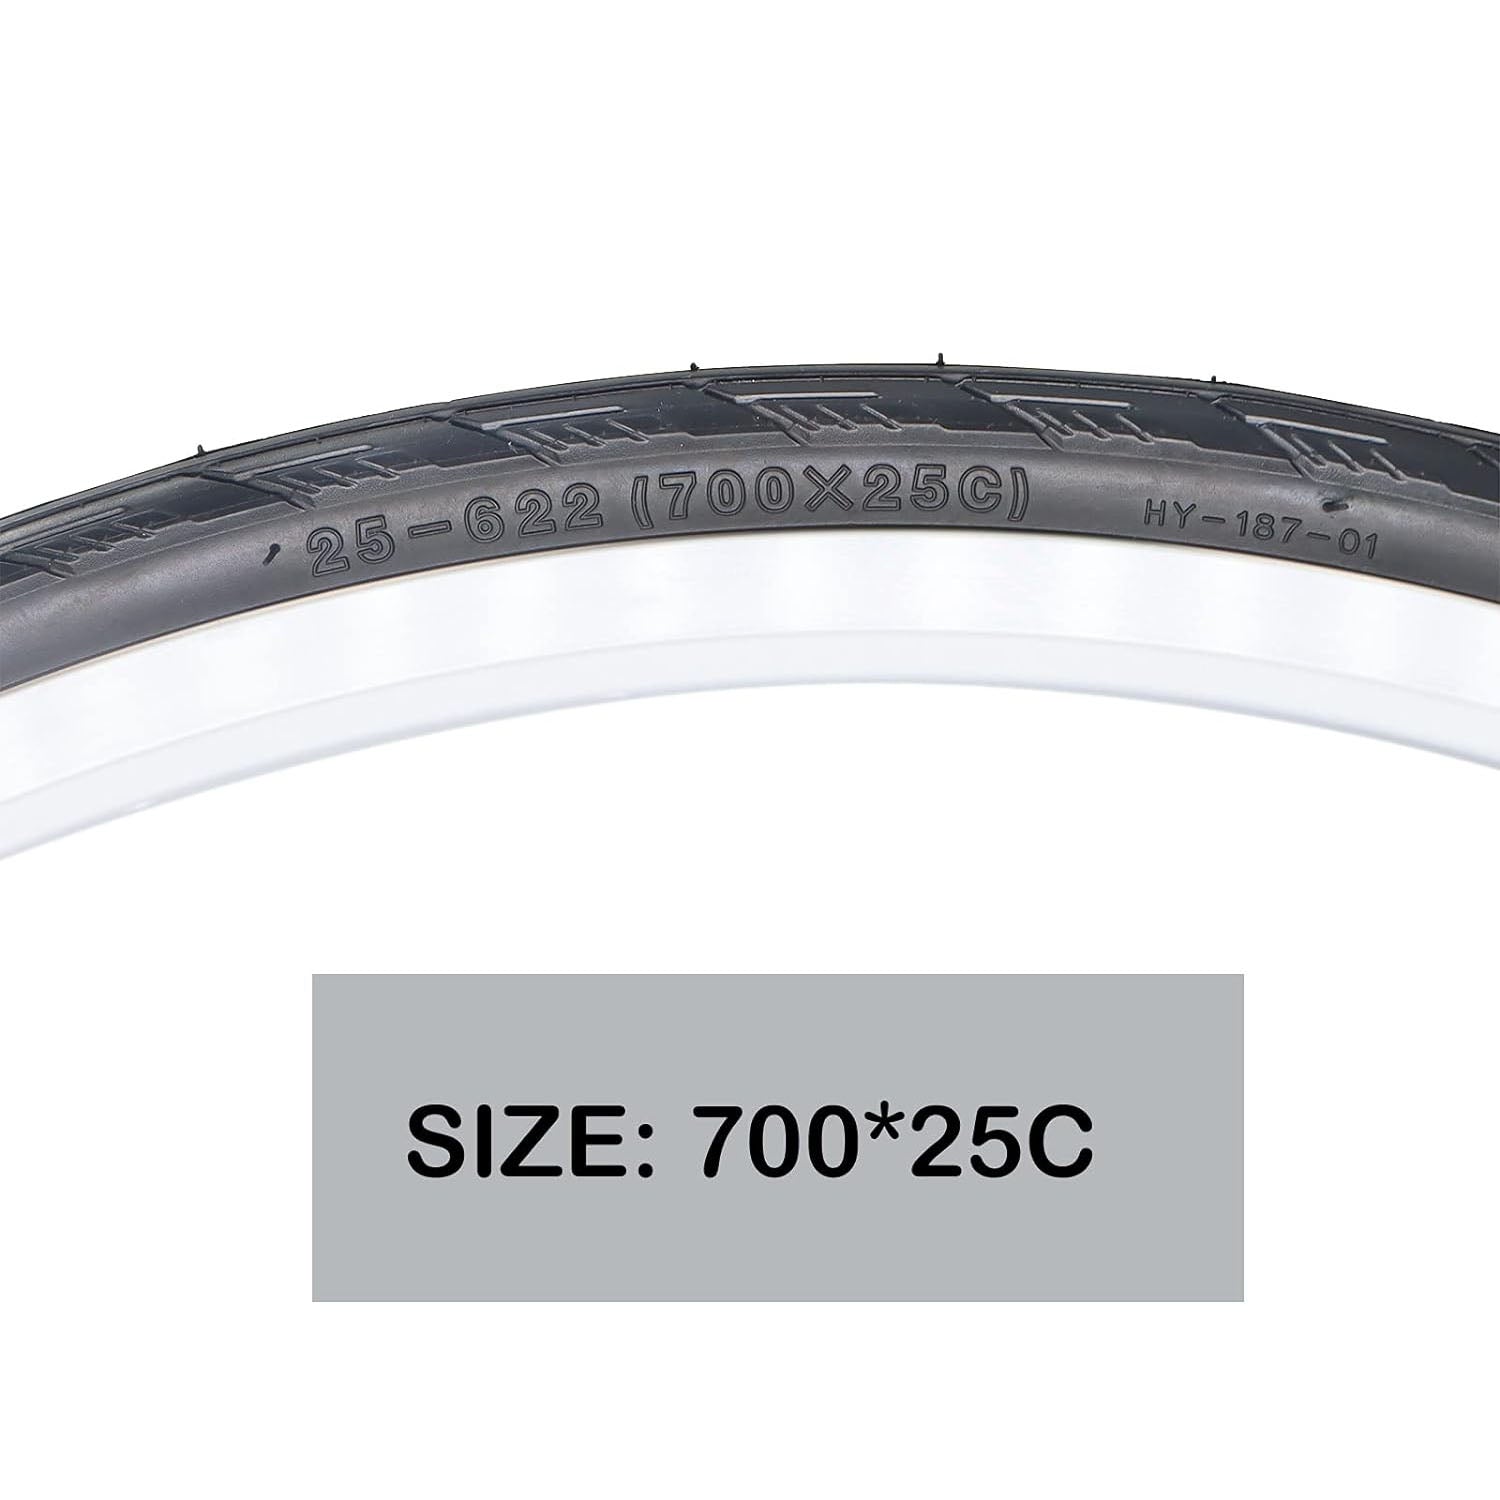 Size of Mohegia Road Bike Tires 700×25C (ETRTO 25-622) - Hycline